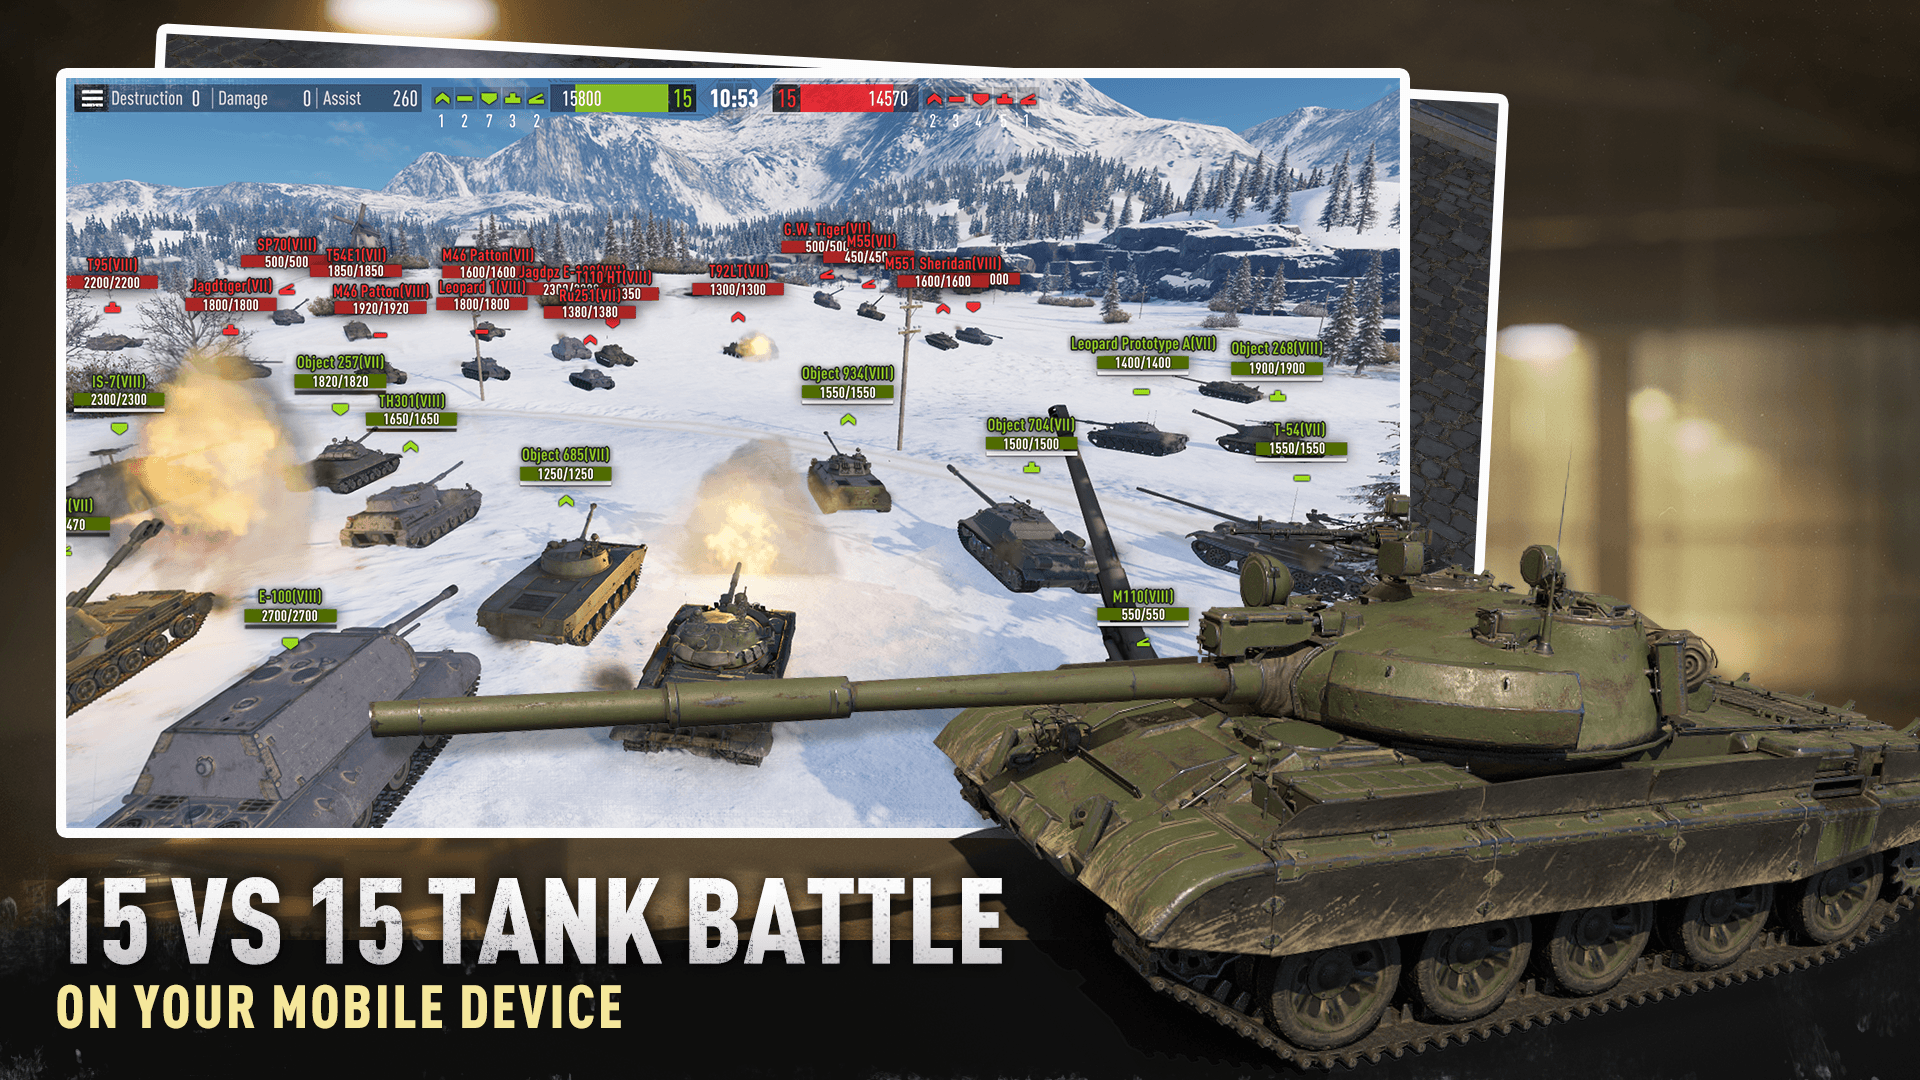 Игра NetEase 15v15 Tank Battle: программное обеспечение Tank Company запущено для Android